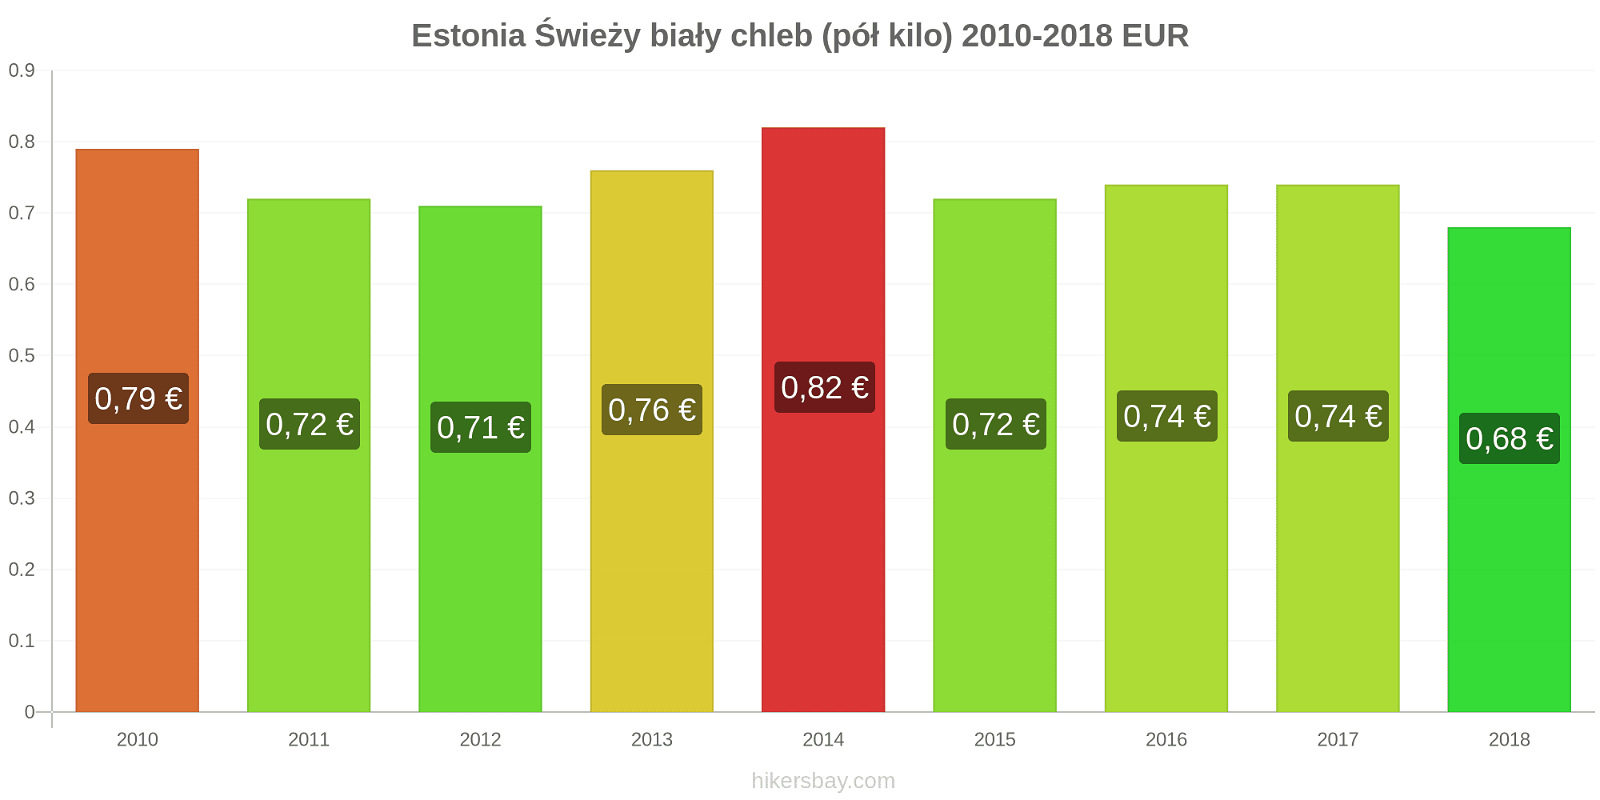 Estonia zmiany cen Chleb pół kilo hikersbay.com